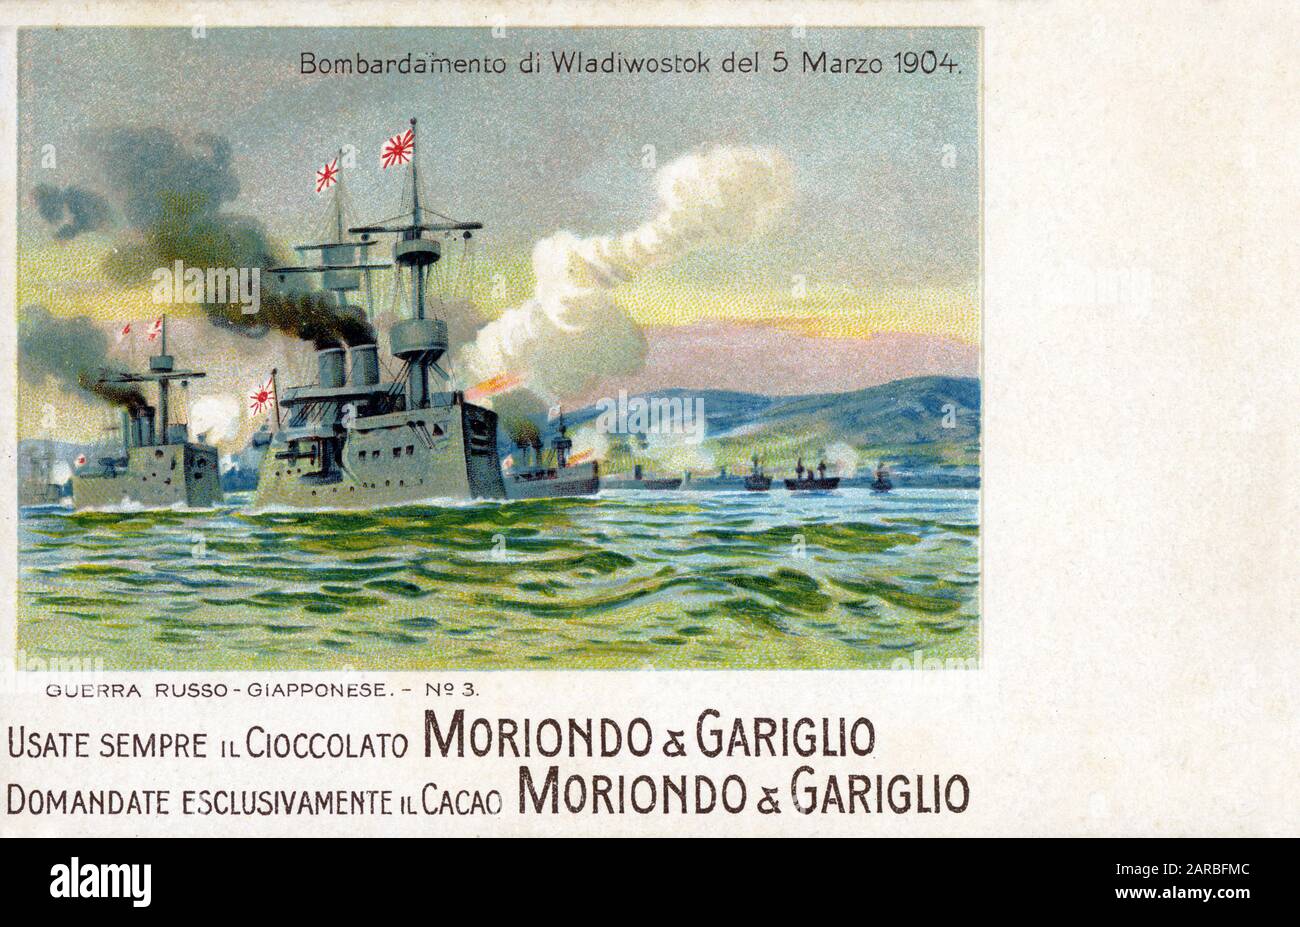 Russo-Japanese War - the Japanese Naval Fleet bombards Vladivostok - 5 March 1904 Stock Photo